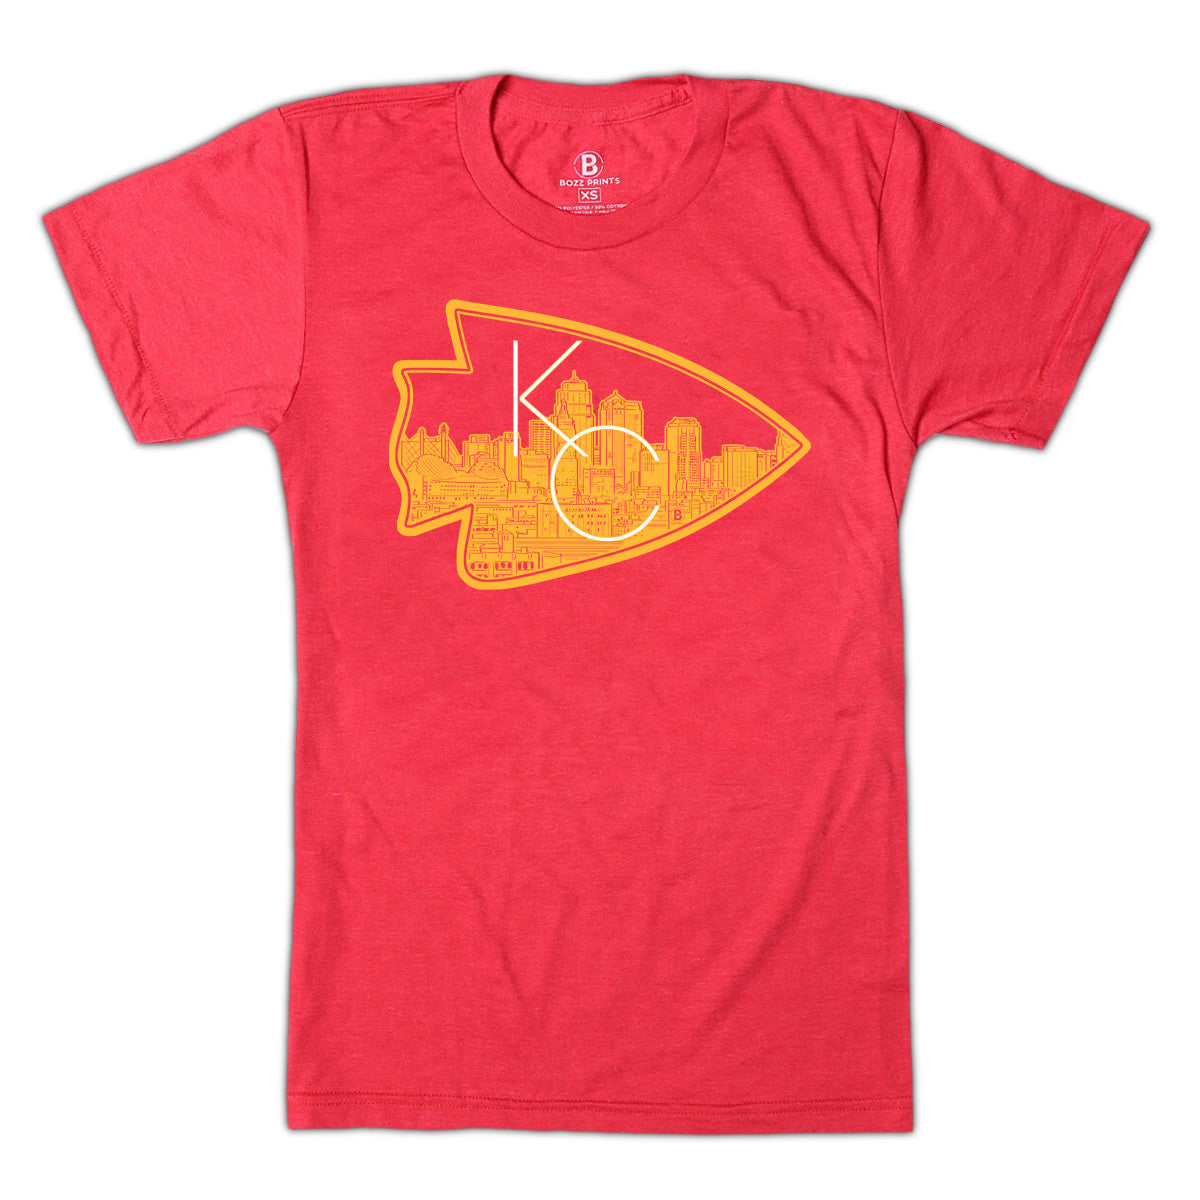 Bozz Prints Kansas City Arrowhead T-Shirt